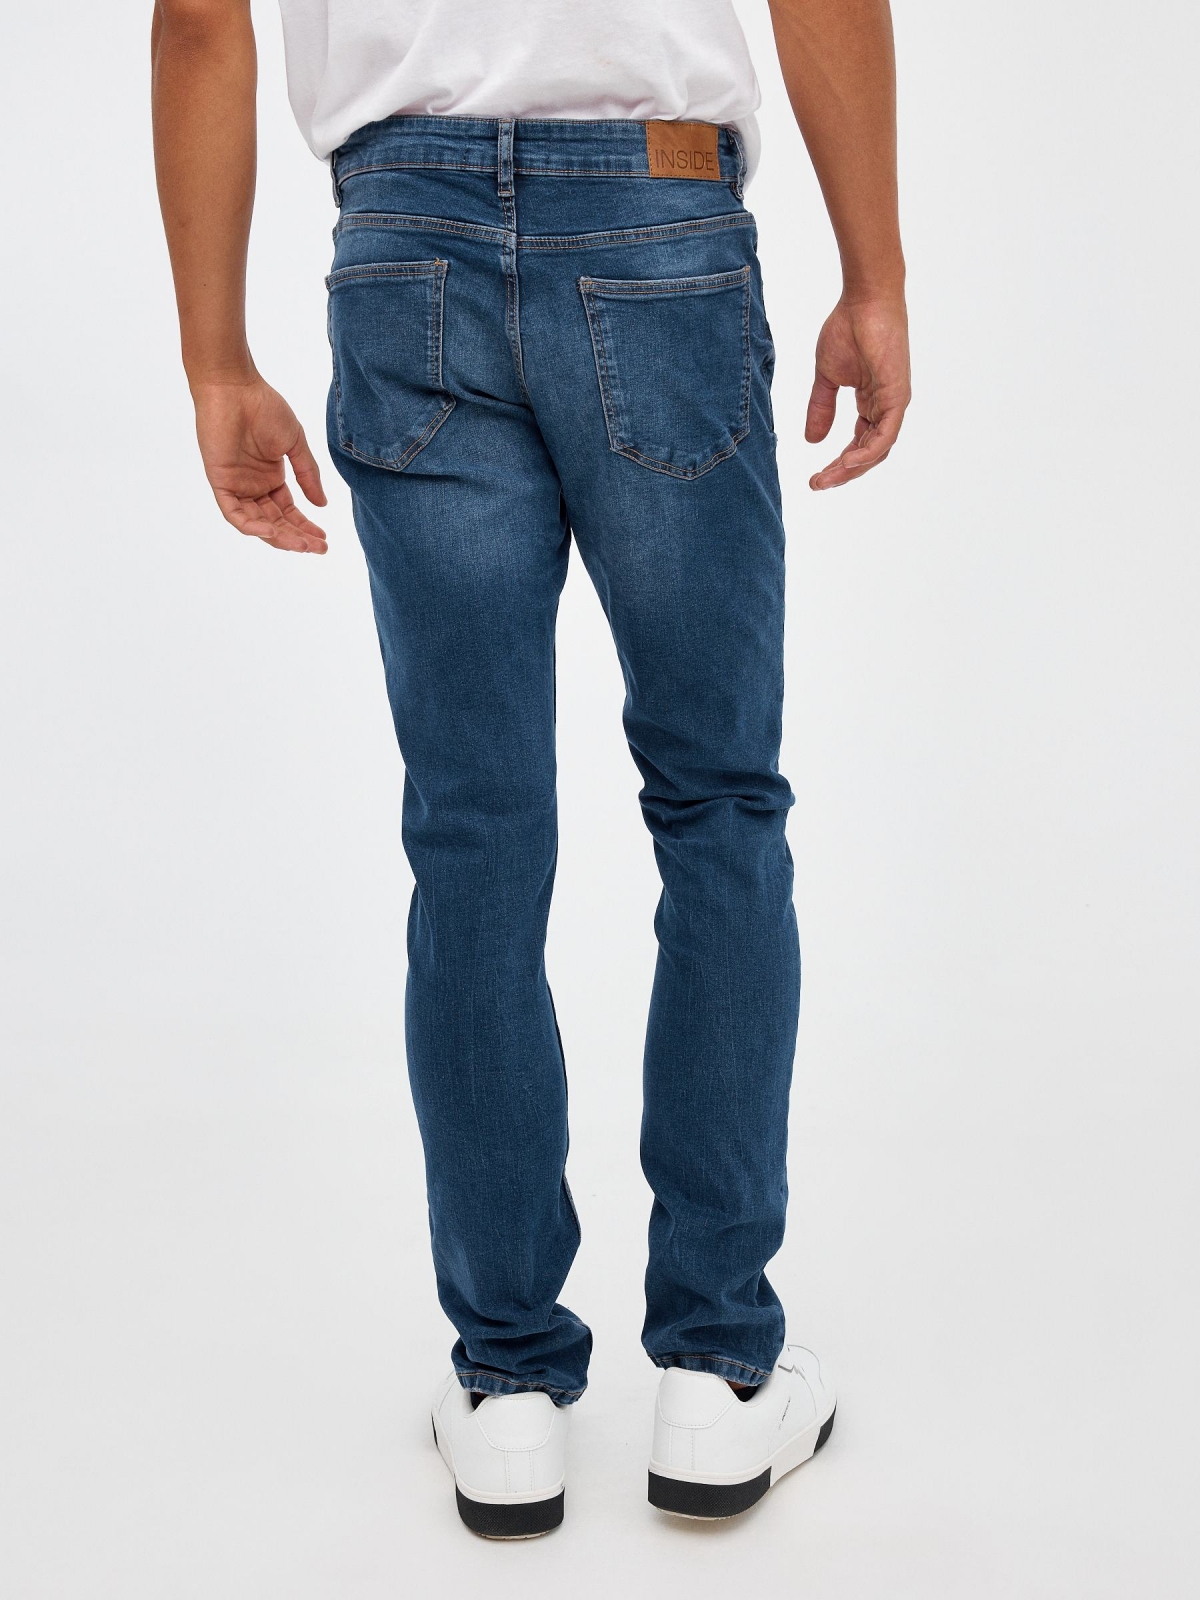 Jeans slim tiro medio denim azul vista media trasera